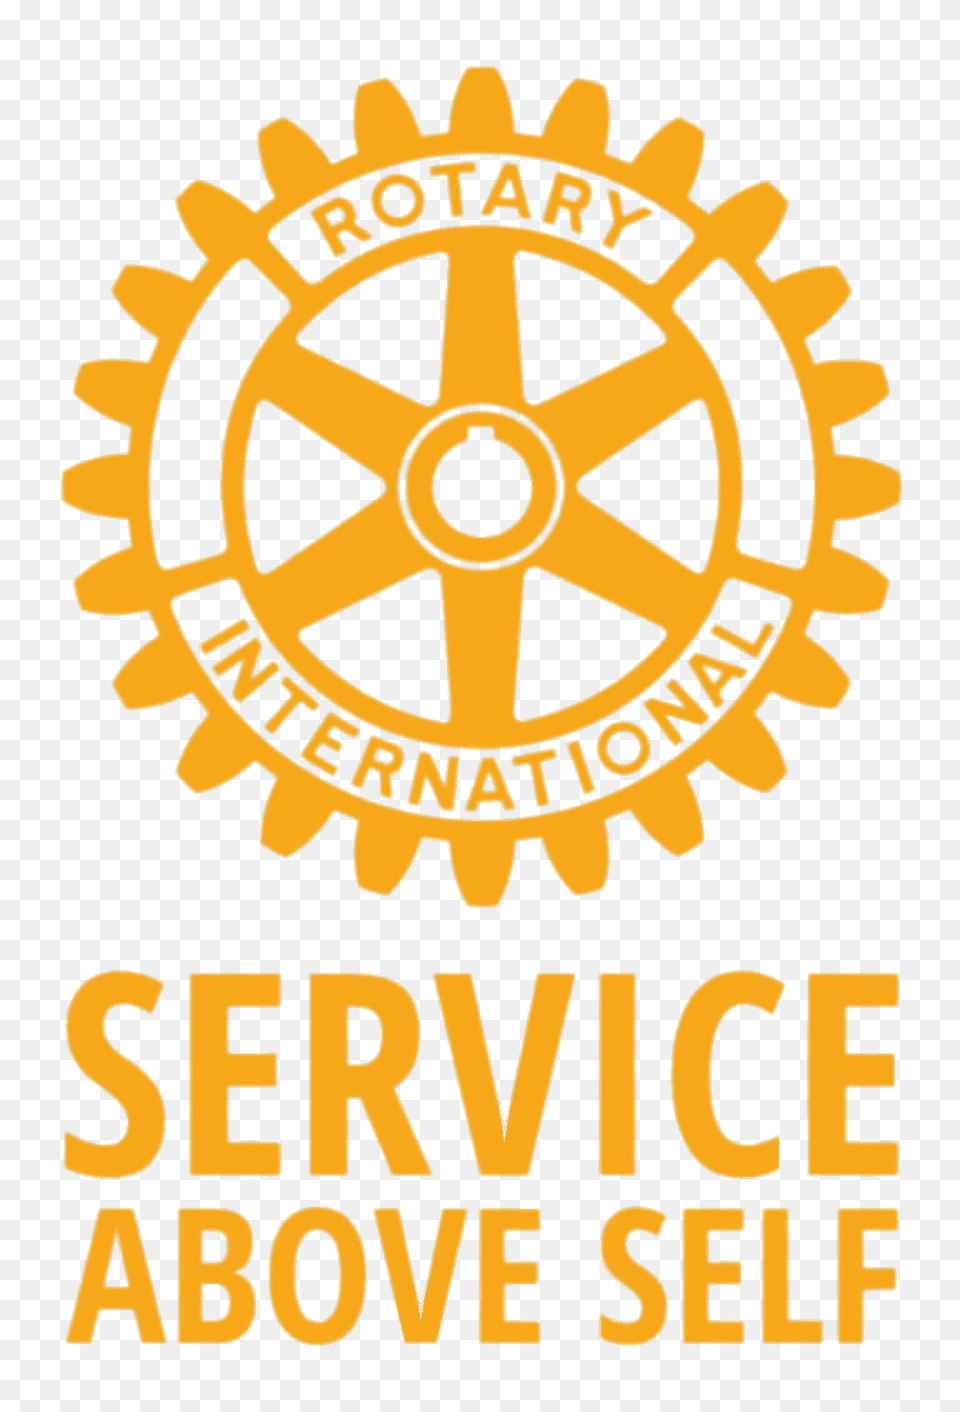 Rotary Logo And Slogan, Ammunition, Grenade, Weapon, Symbol Png